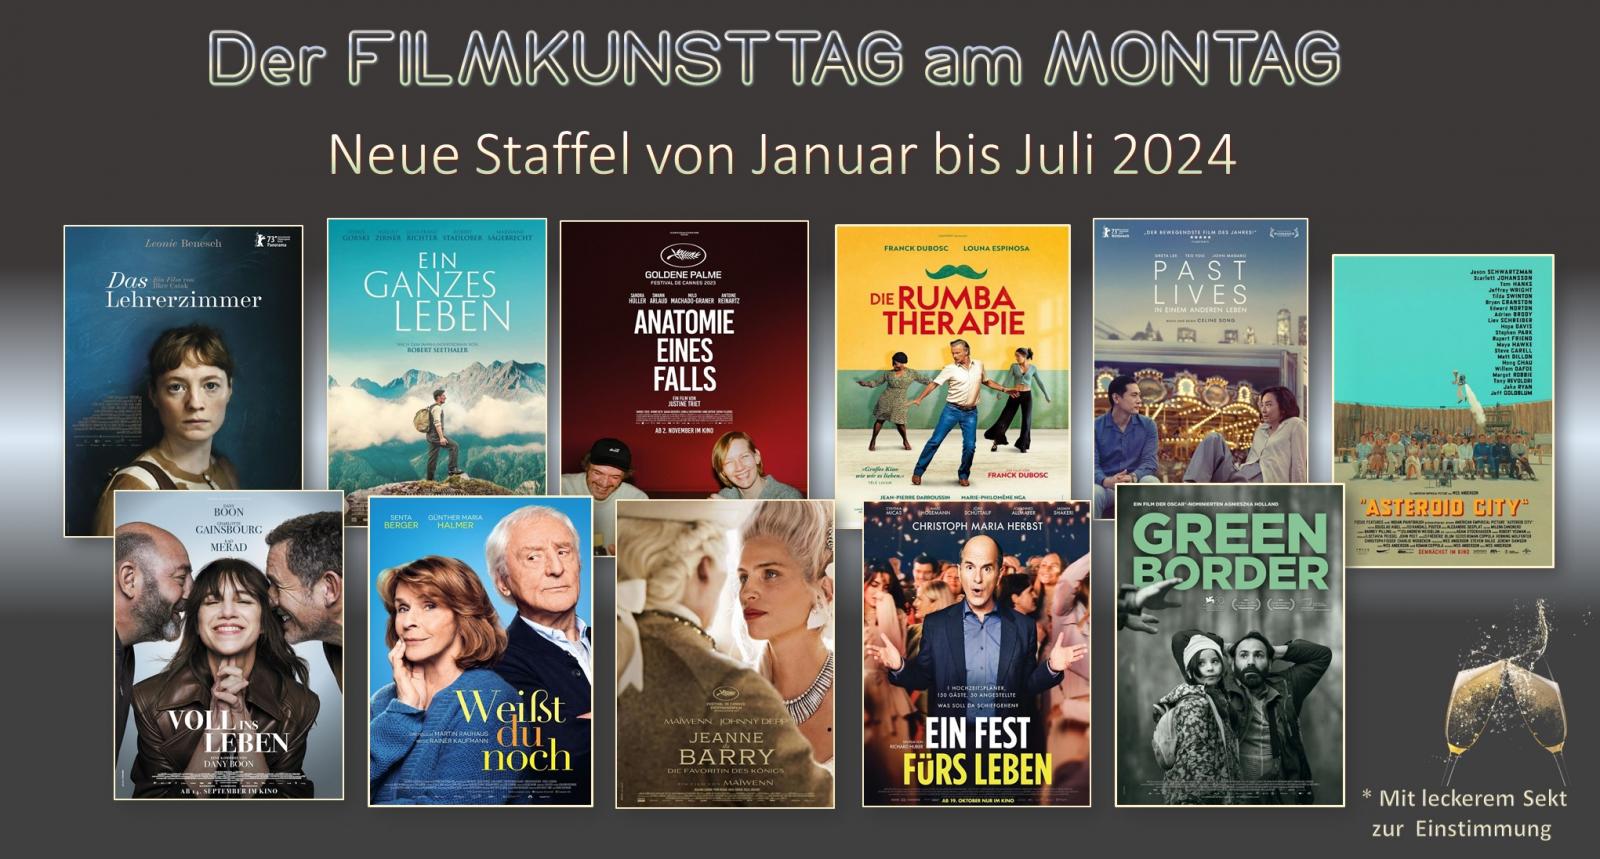 DER FILMKUNSTTAG AM MONTAG - NEUE STAFFEL AB JANUAR!